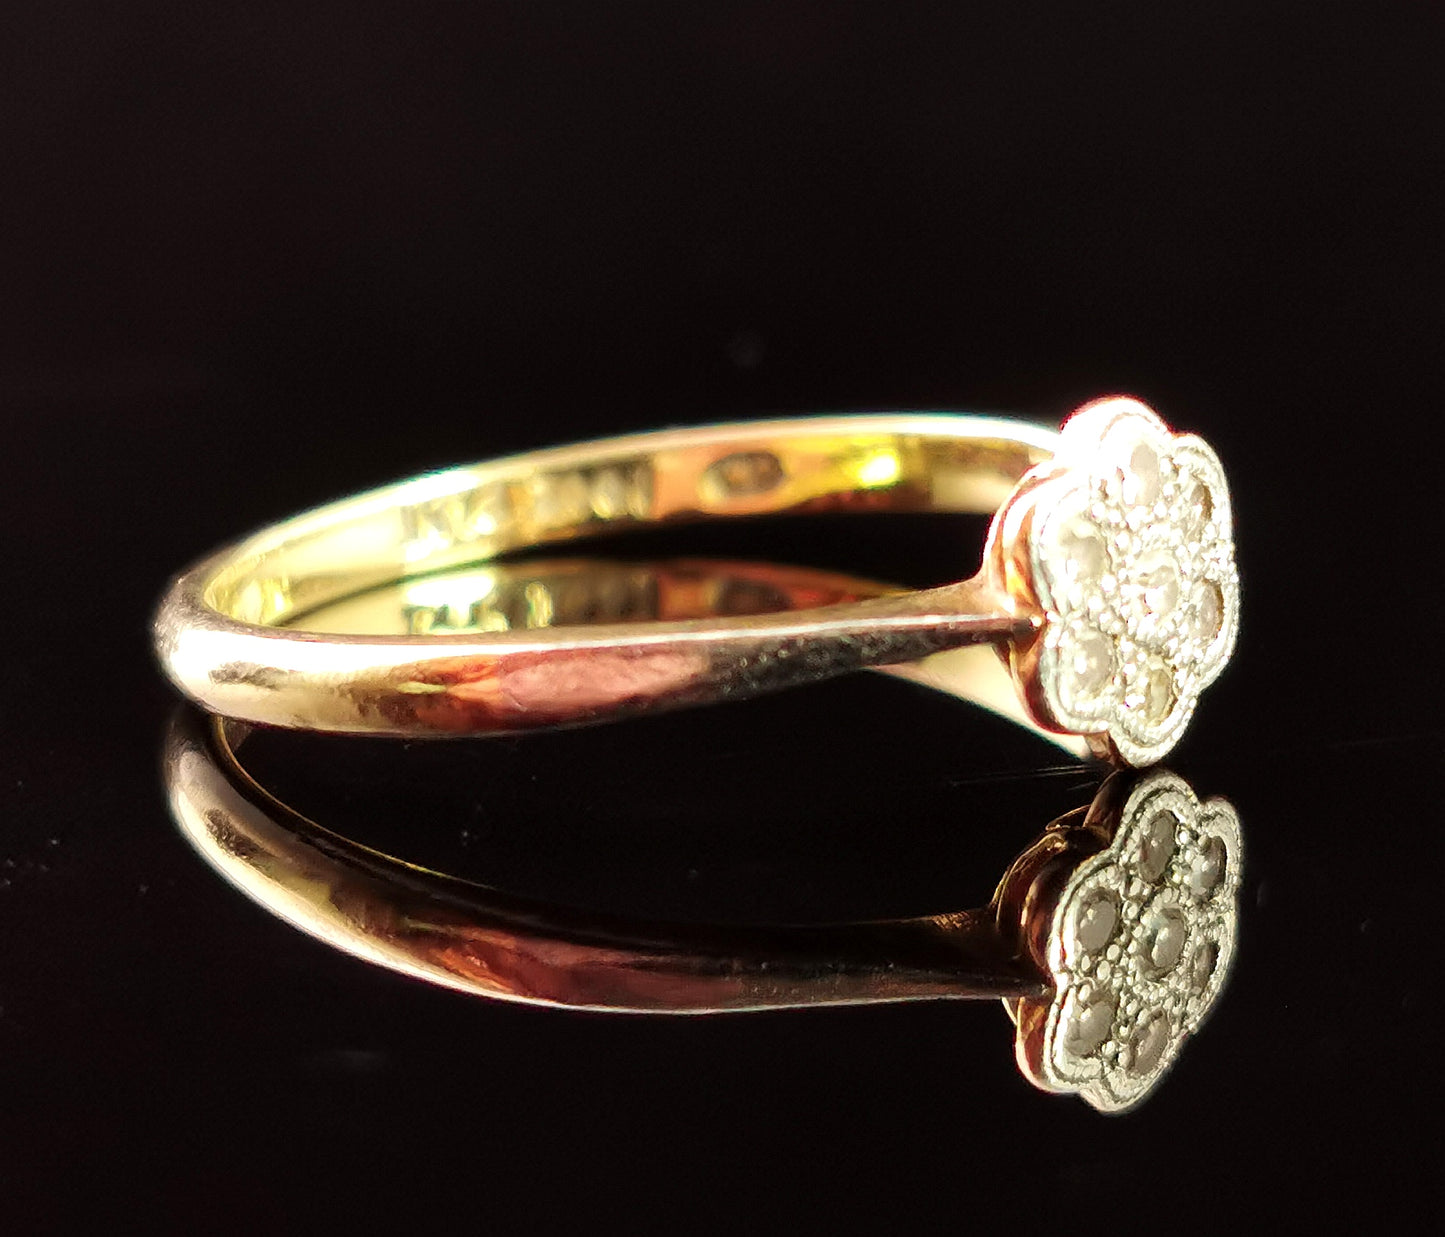 Antique diamond daisy ring, 18ct gold and platinum